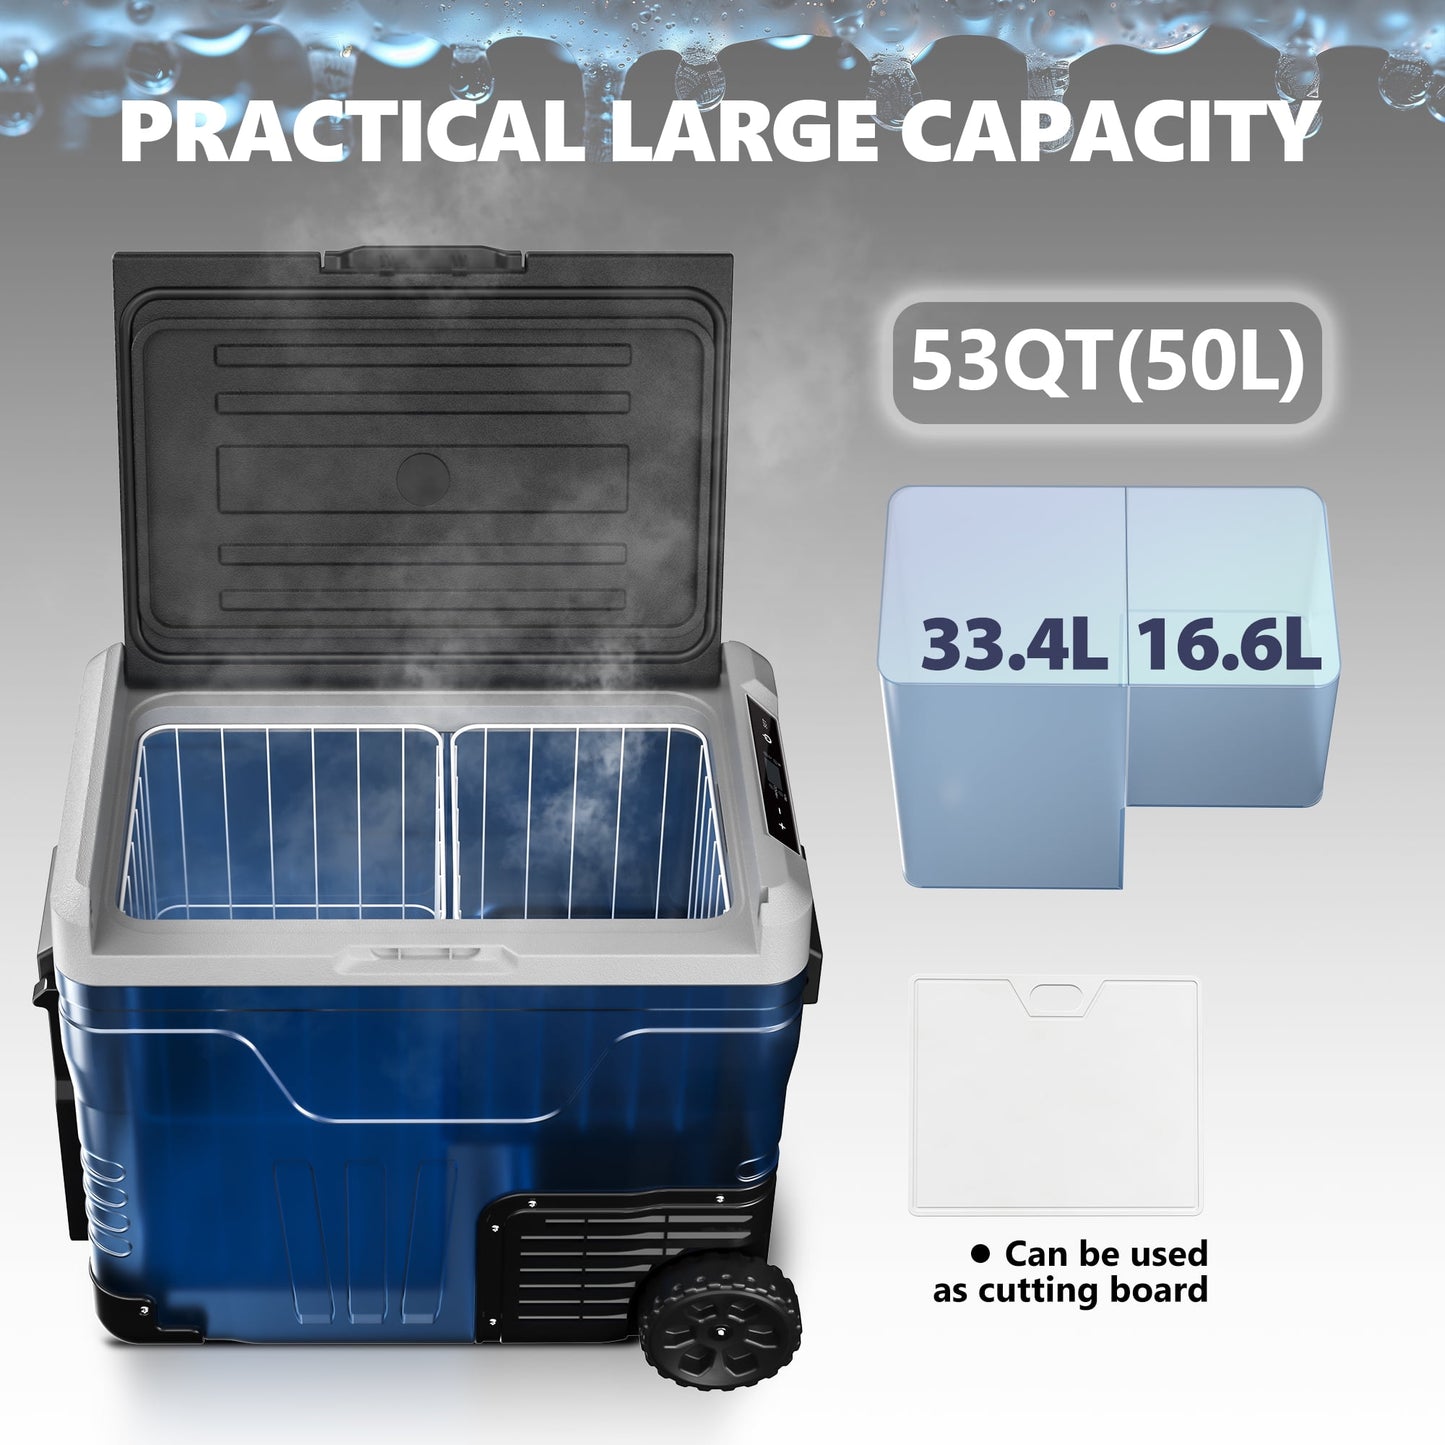 Simzlife 12Volt Portable Refrigerator, 53QT(50L) Car Fridge DC & AC, -4℉~68℉, Freezer Fridge Cooler with Wheels & 2 Baskets for RV, Travel, Truck, Camping, Black